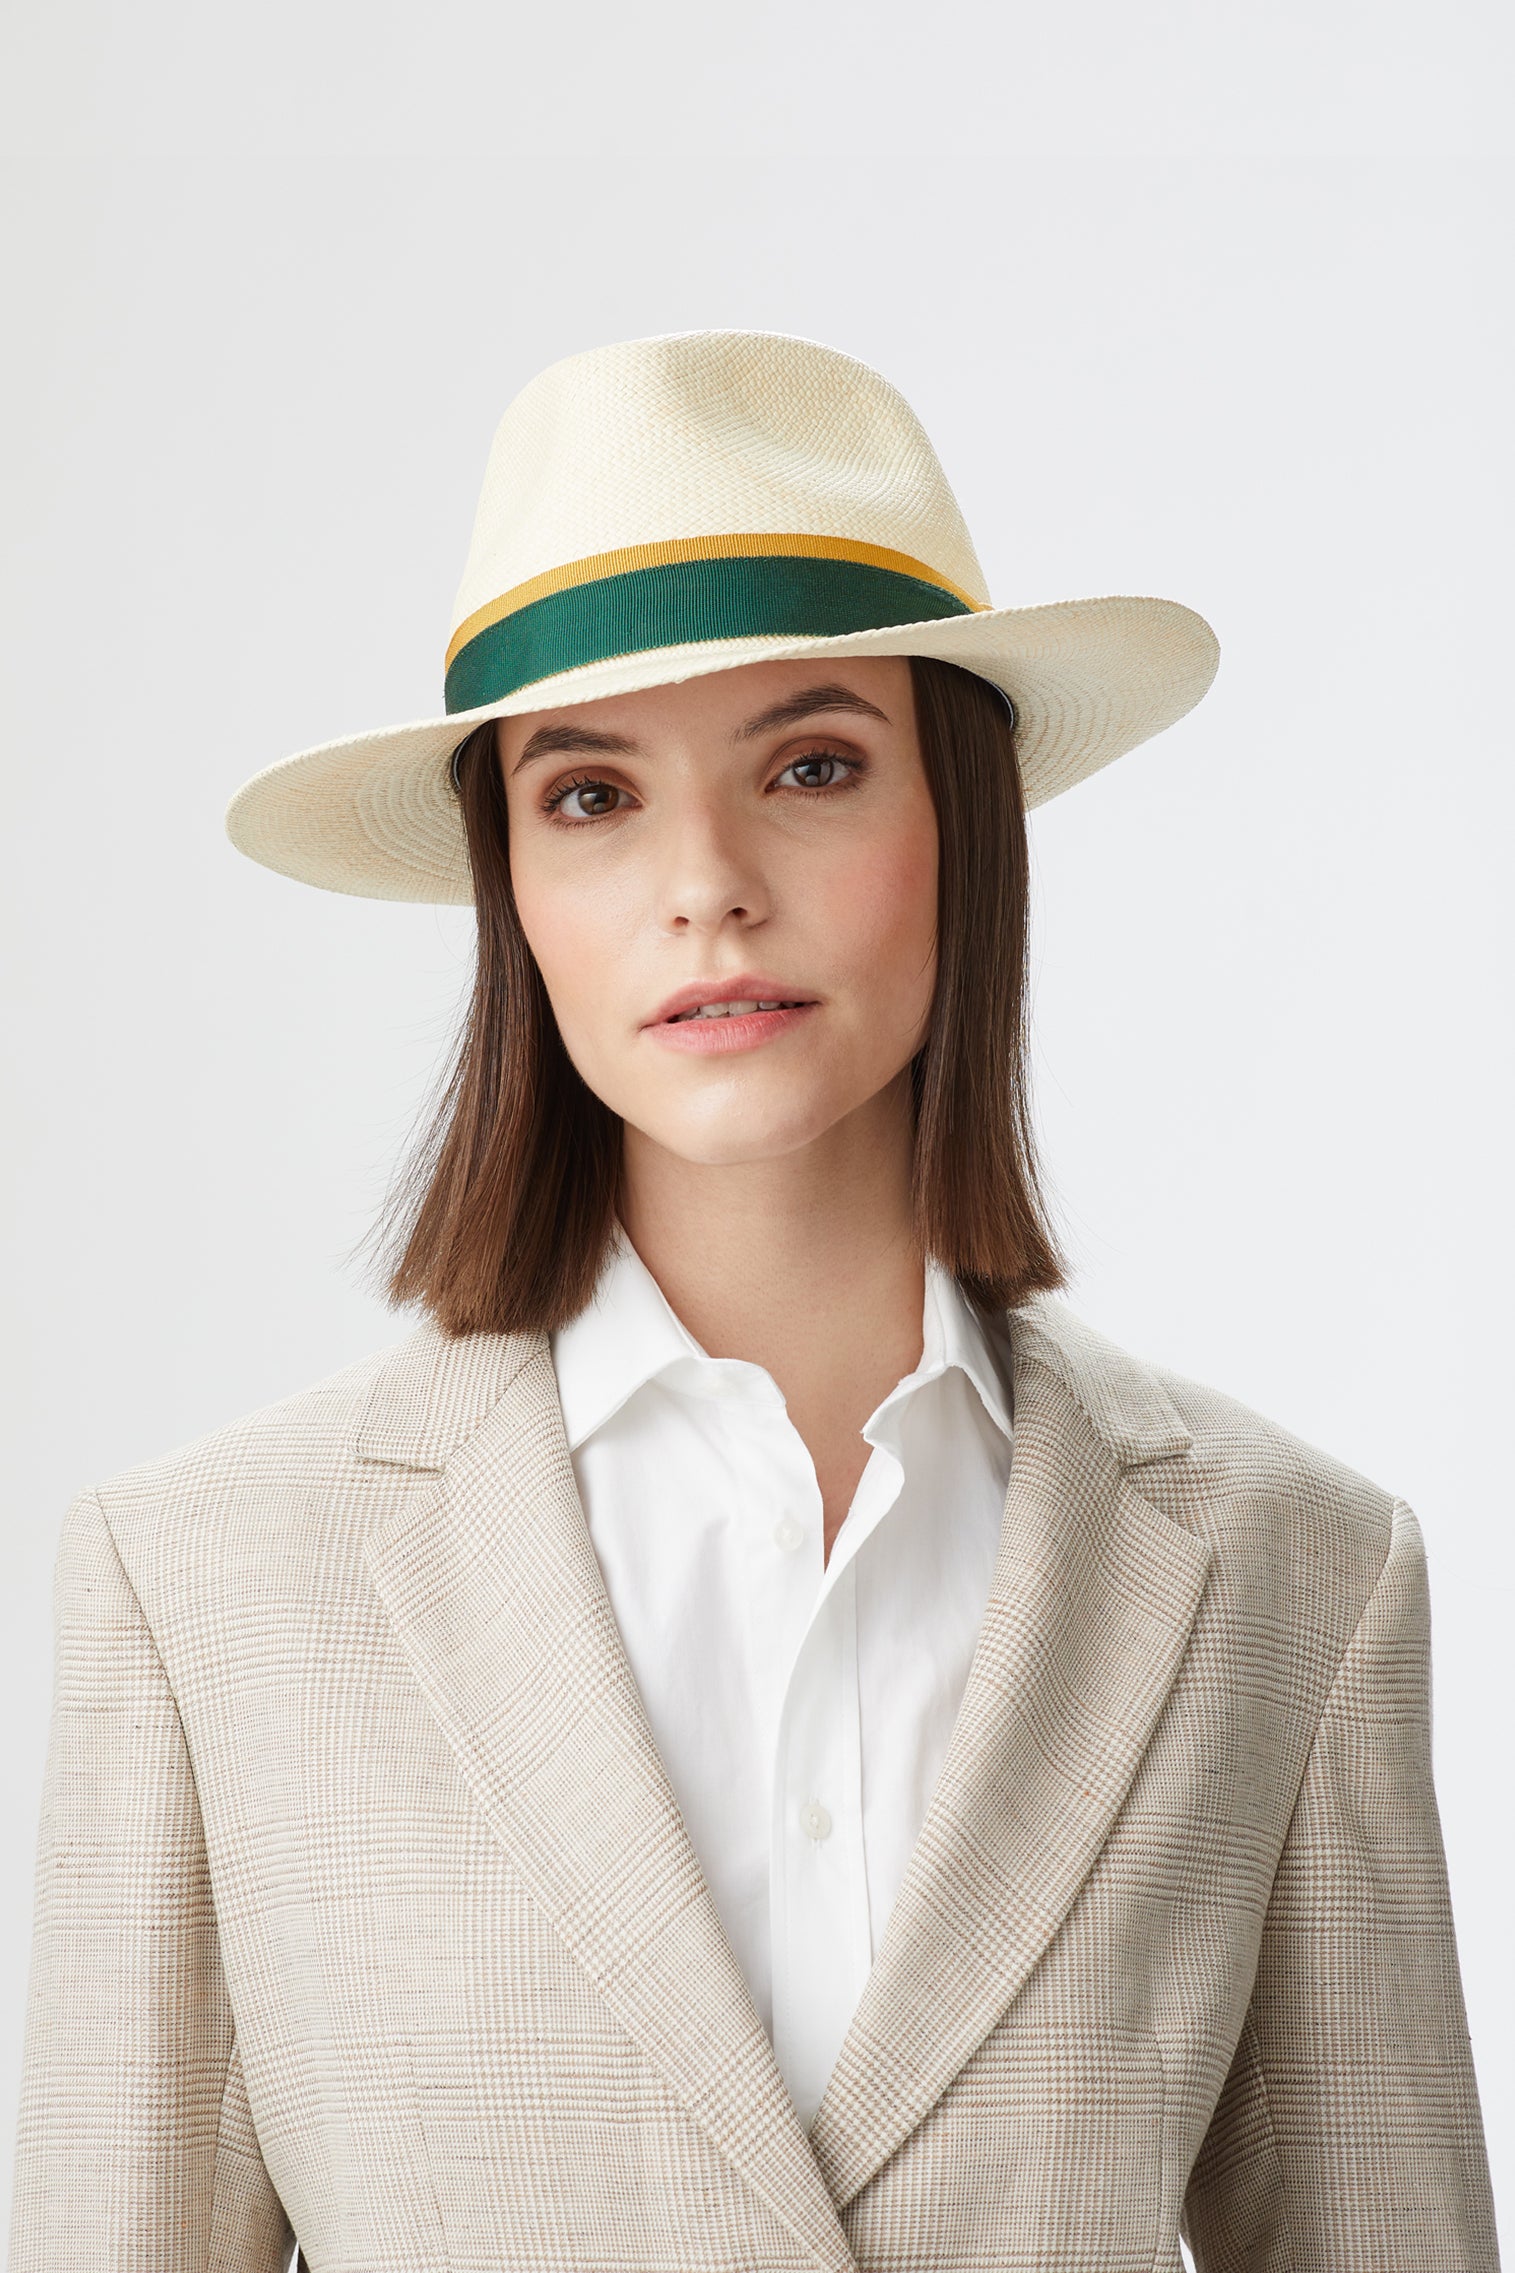 Highgrove Panama - Panamas and Sun Hats for Men - Lock & Co. Hatters London UK